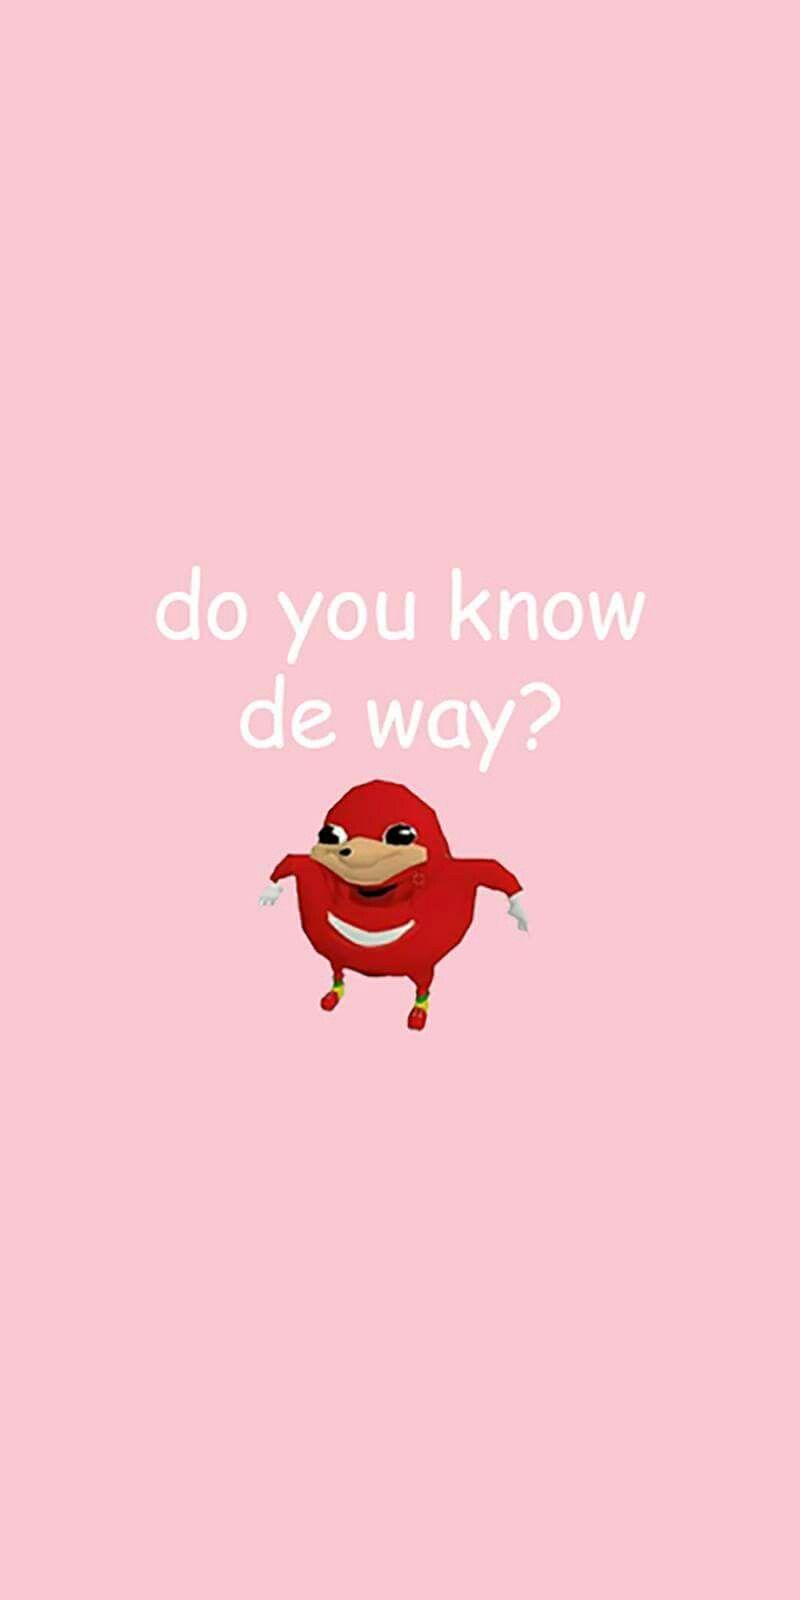 Ugandan Knuckles do you know de way? Wallpaper. Dank Memes